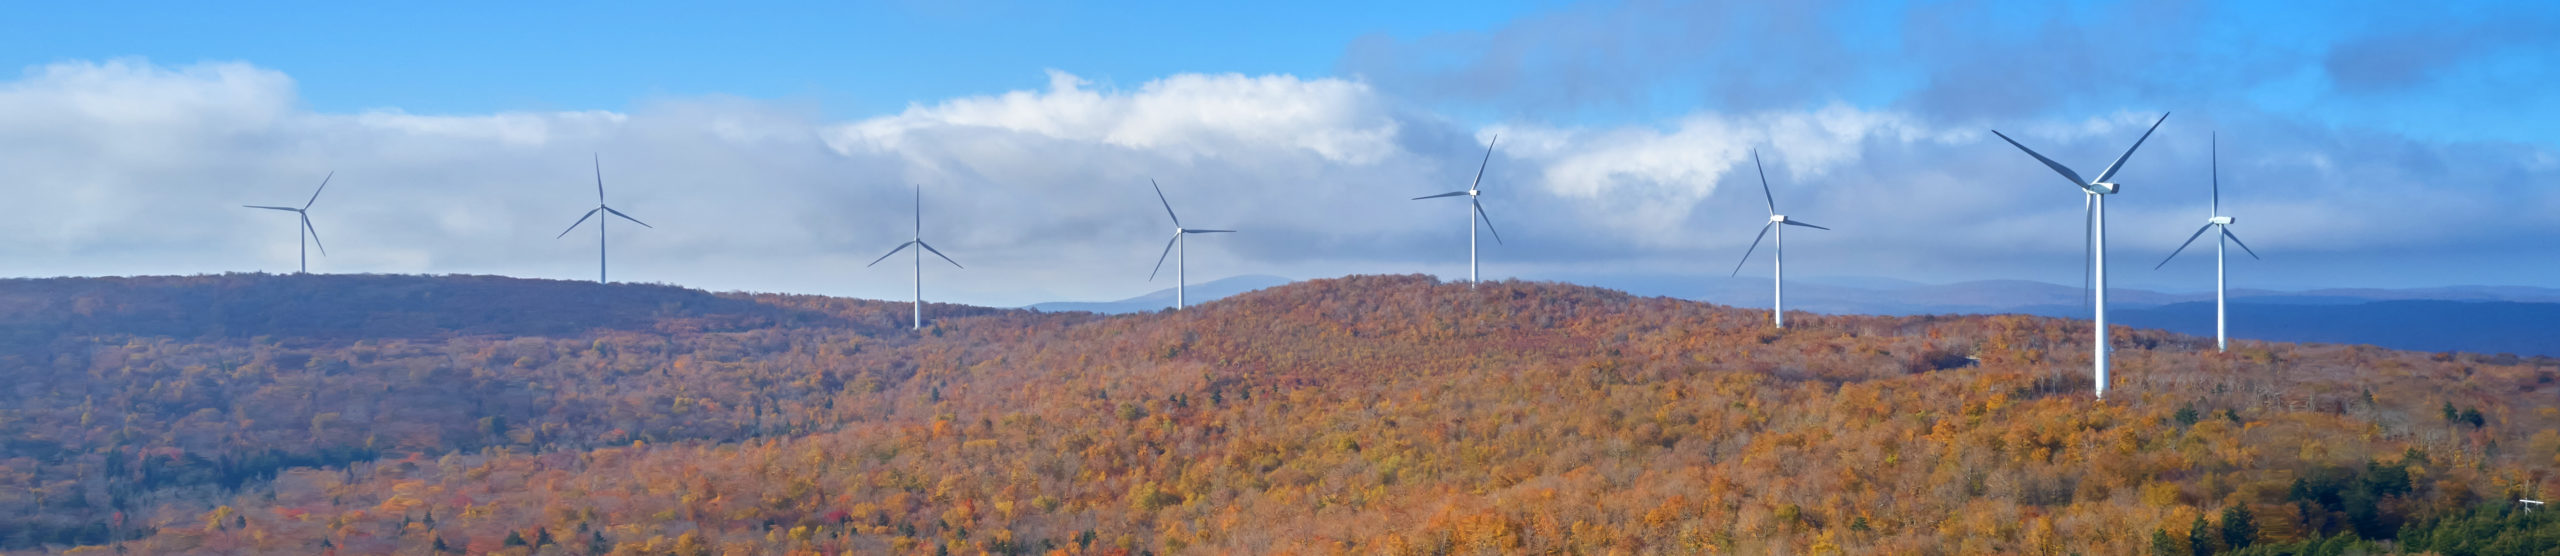 Wind turbine fleet